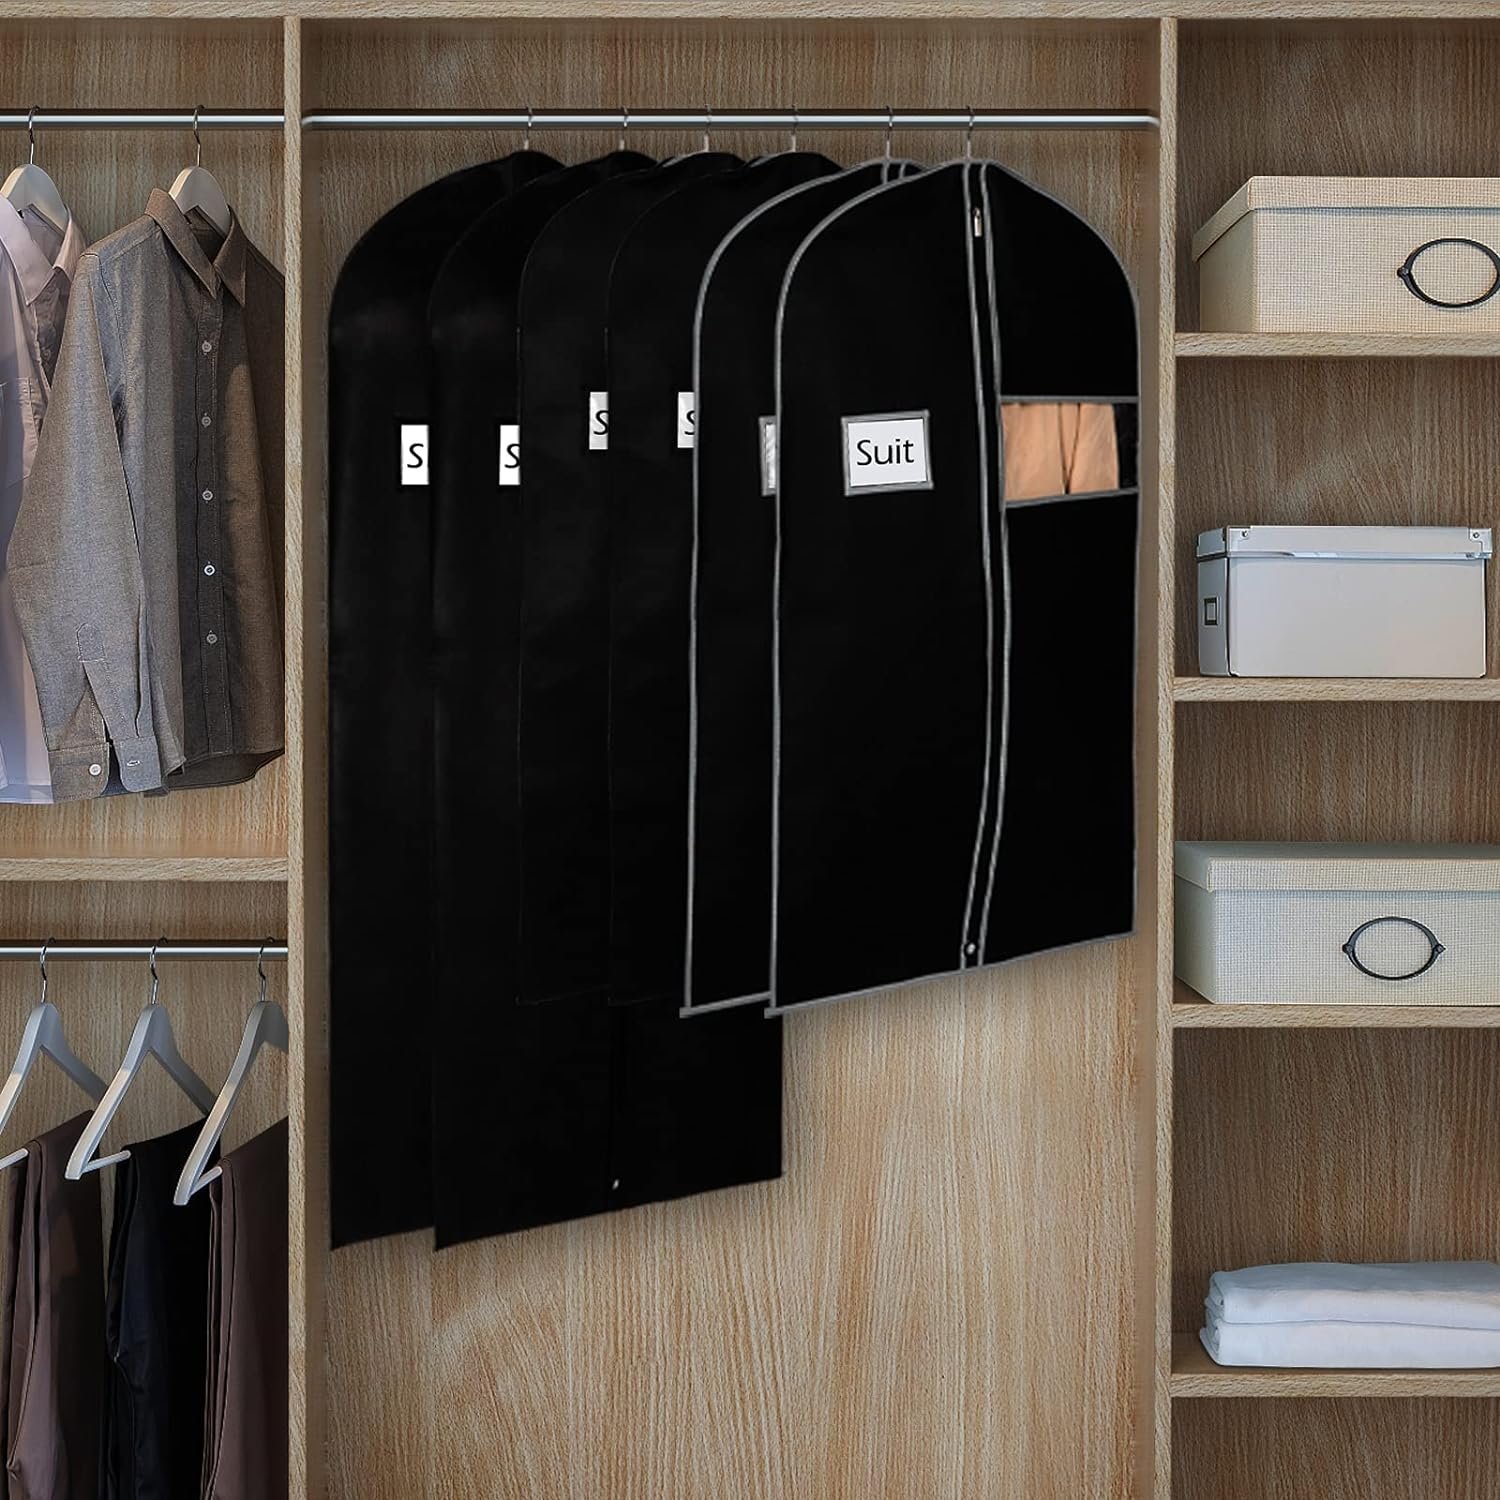 Syeeiex Dress Bag (60 Inch) Suit Bags for Closet Storage Breathbale Suit Cover, Garment Bags with Clear Window for Women, Men, Dress, Suit, Black, Set of 8 : Home  Kitchen